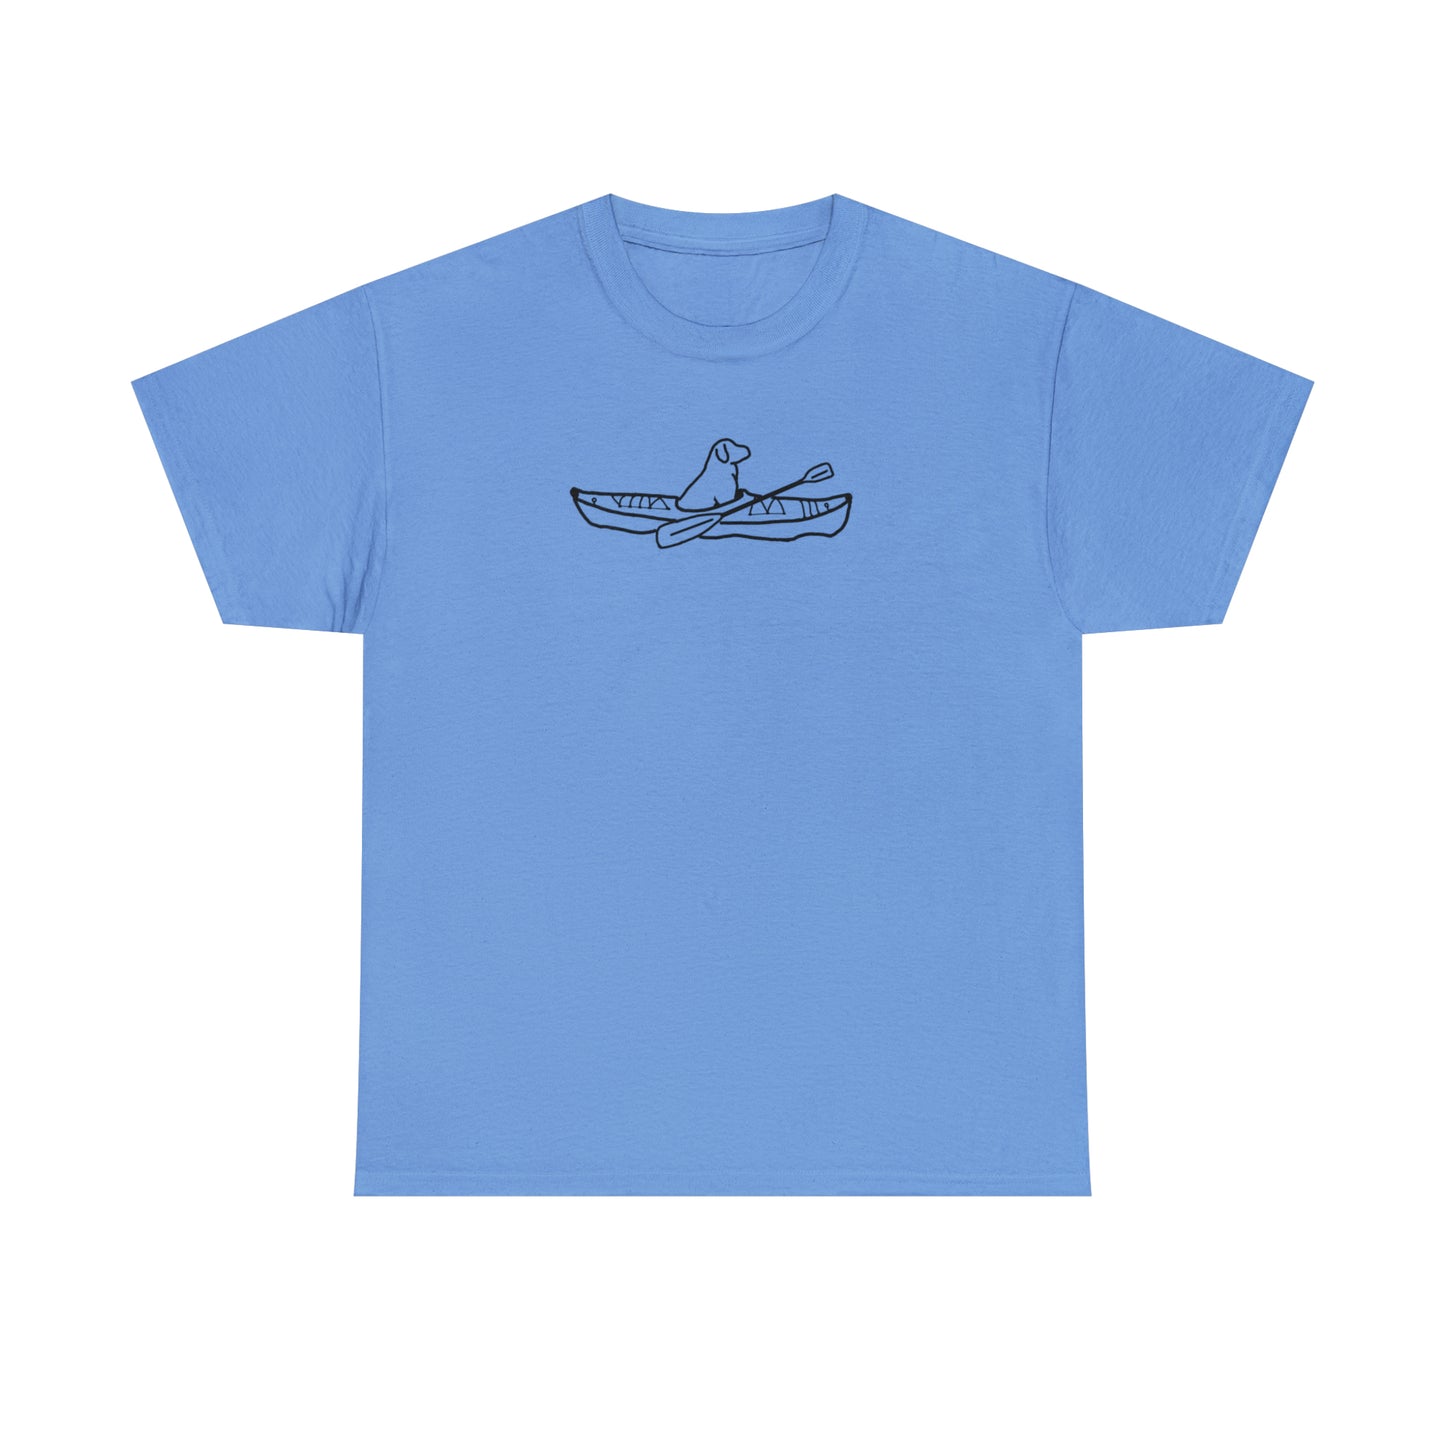 Kayak Dog - Lac LaBelle Unisex Heavy Tee Shirt